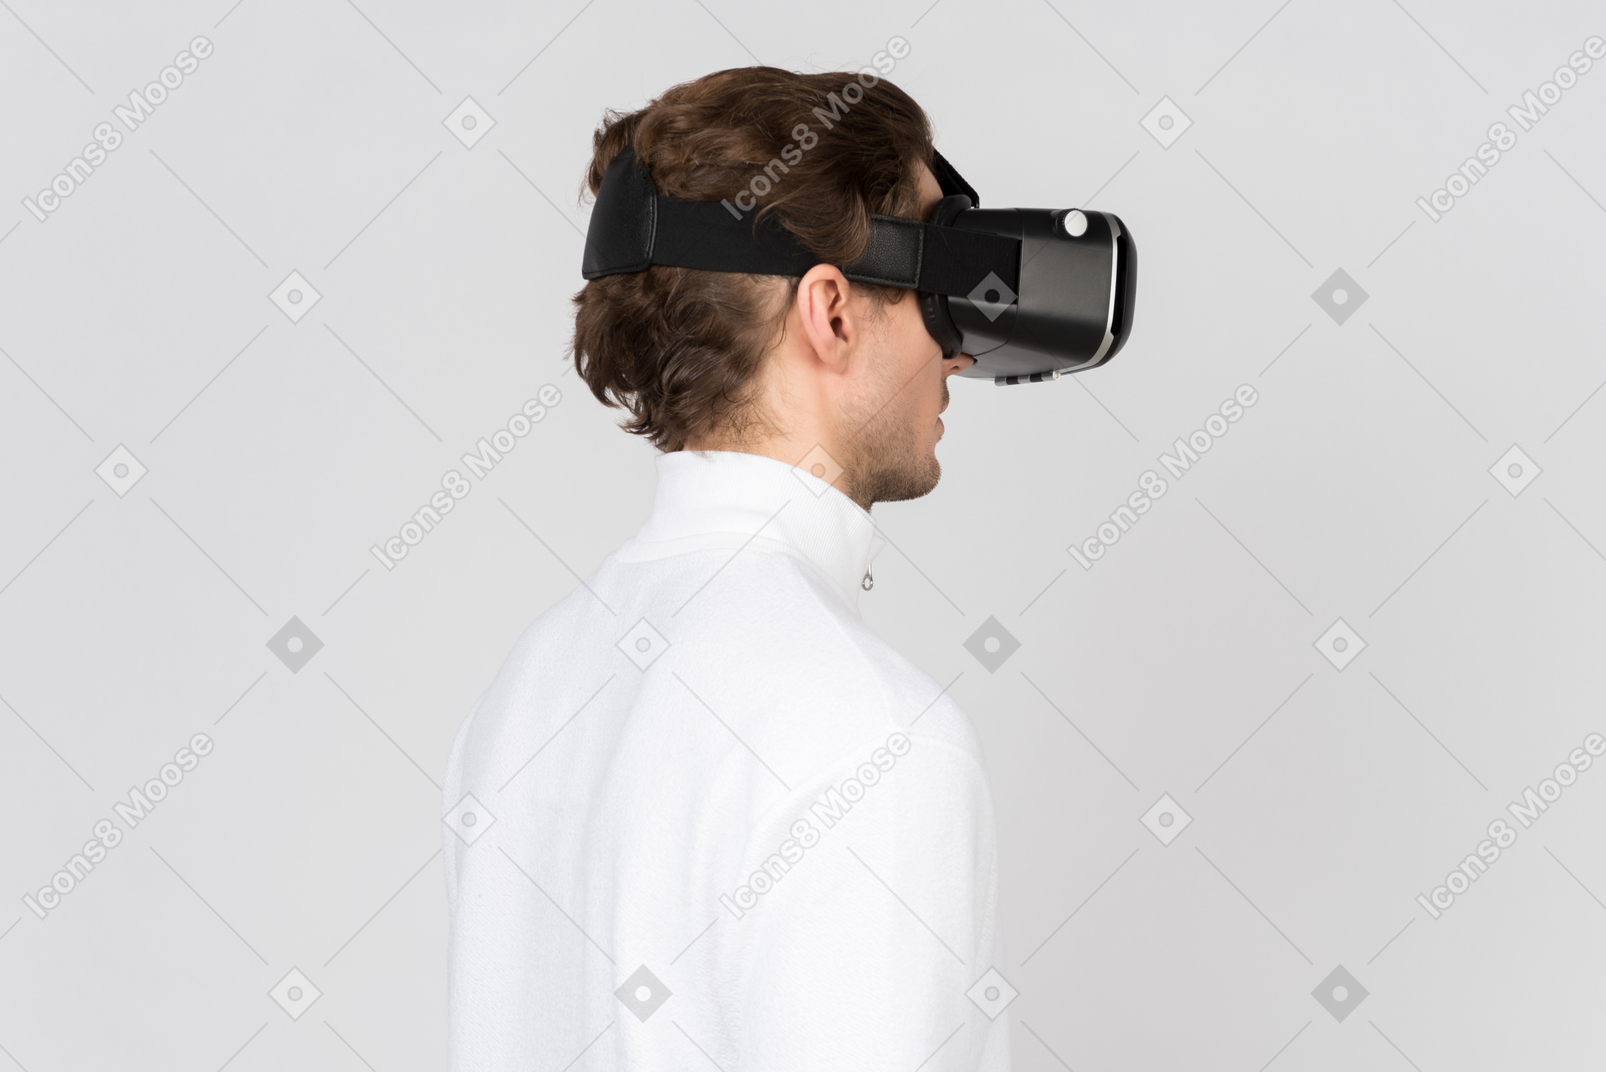 Vista lateral do homem no fone de ouvido de realidade virtual